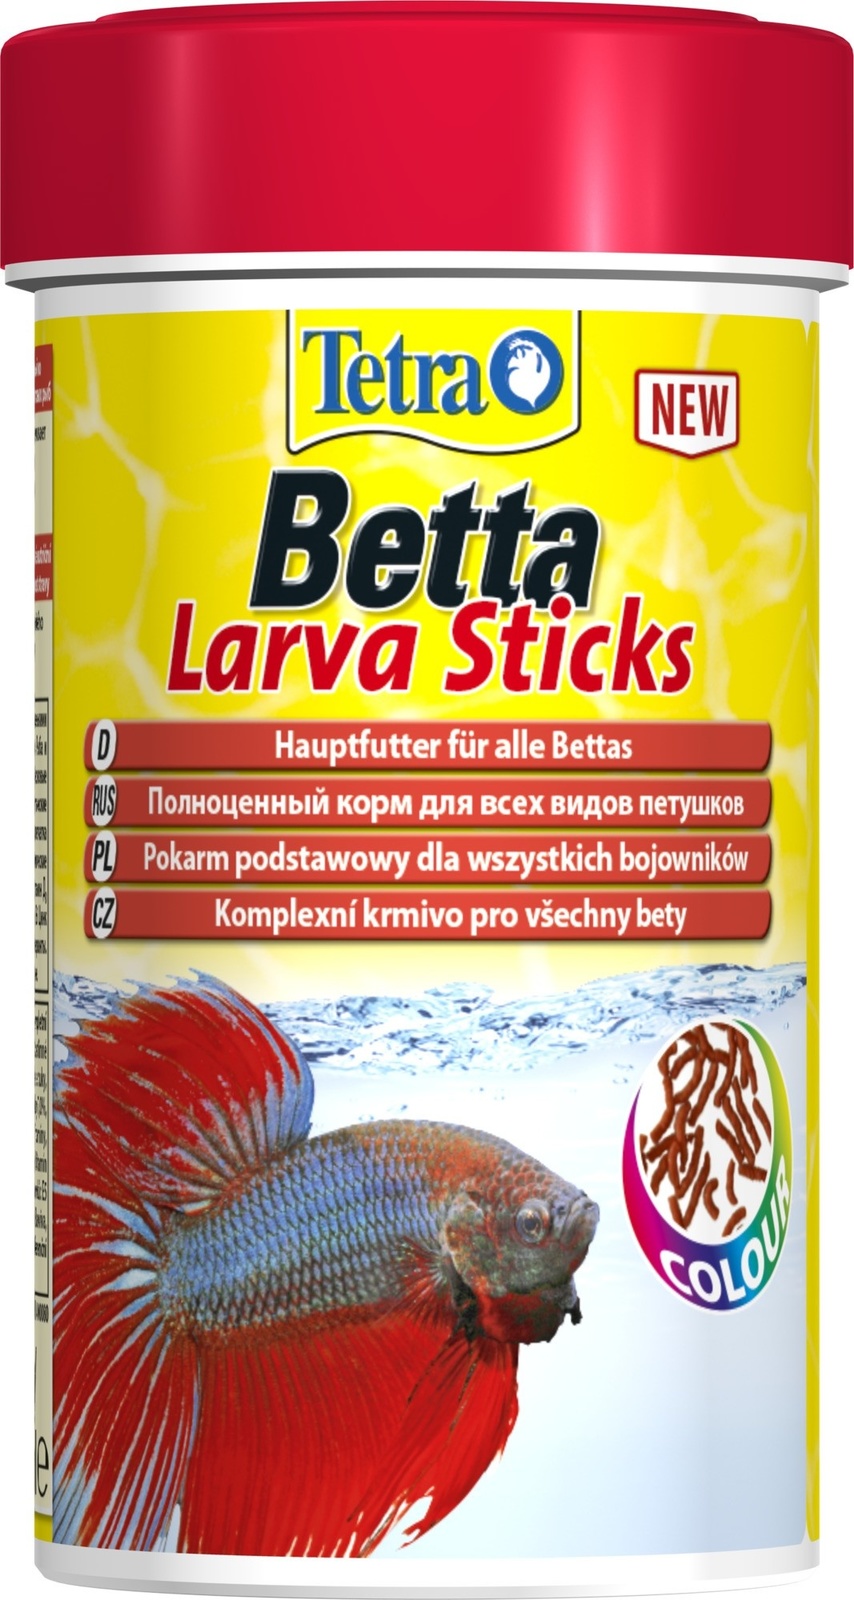 Tetra (корма) корм для петушков и лабиринтовых рыб. палочки Betta Larva  Sticks | Petshop.ru